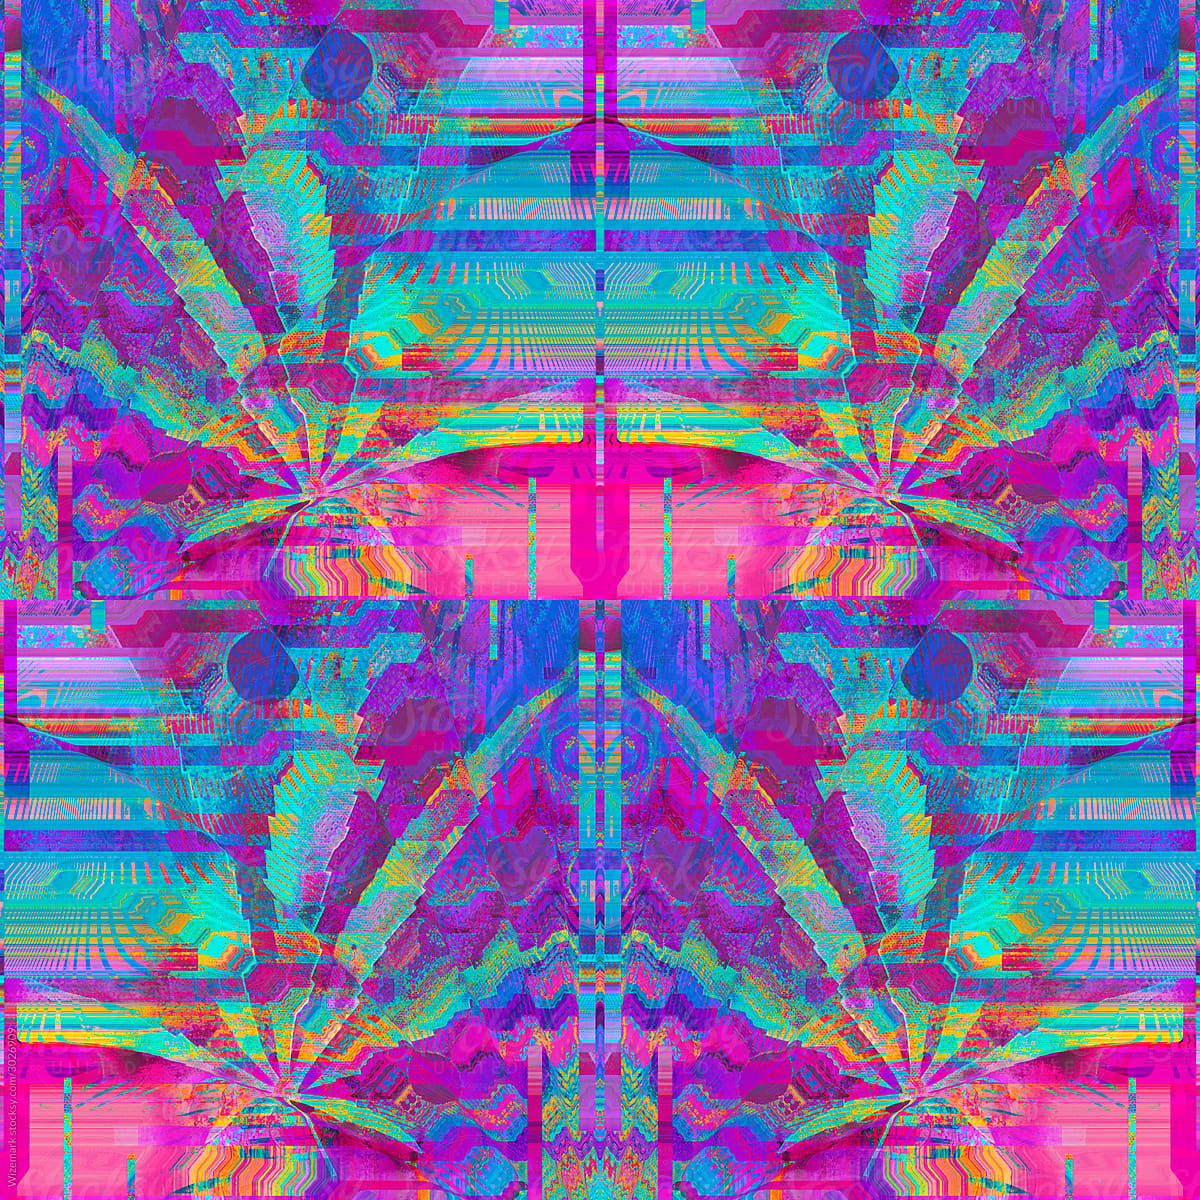 Symmetric marijuana leaves in experimental collage glitch art.